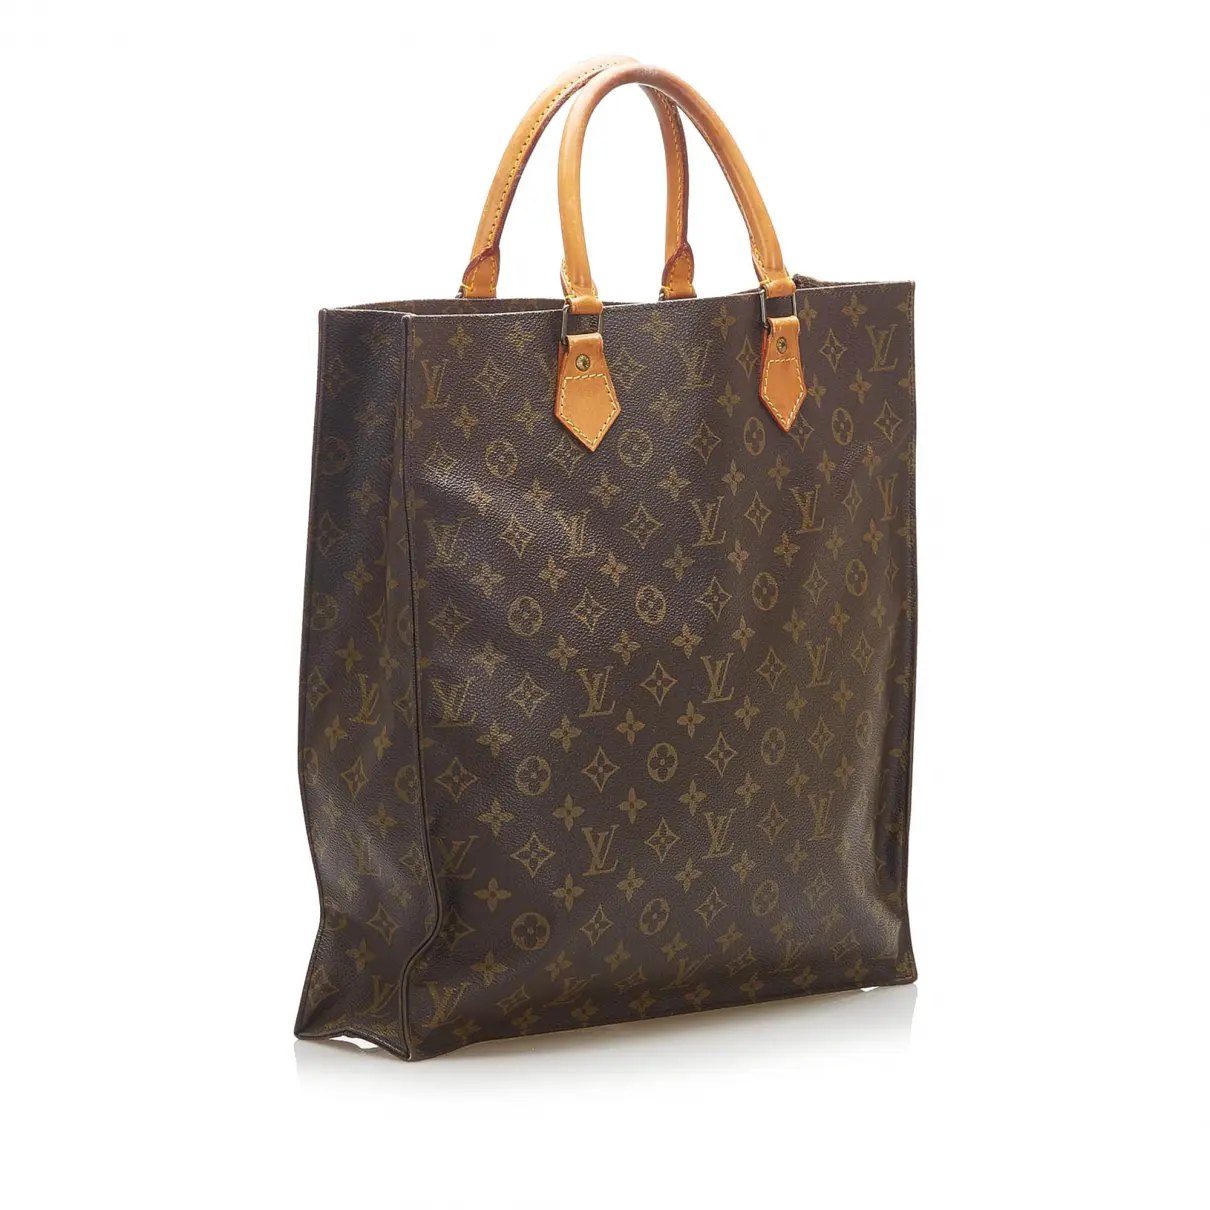 Buy Louis Vuitton Plat cloth handbag online - Vintage